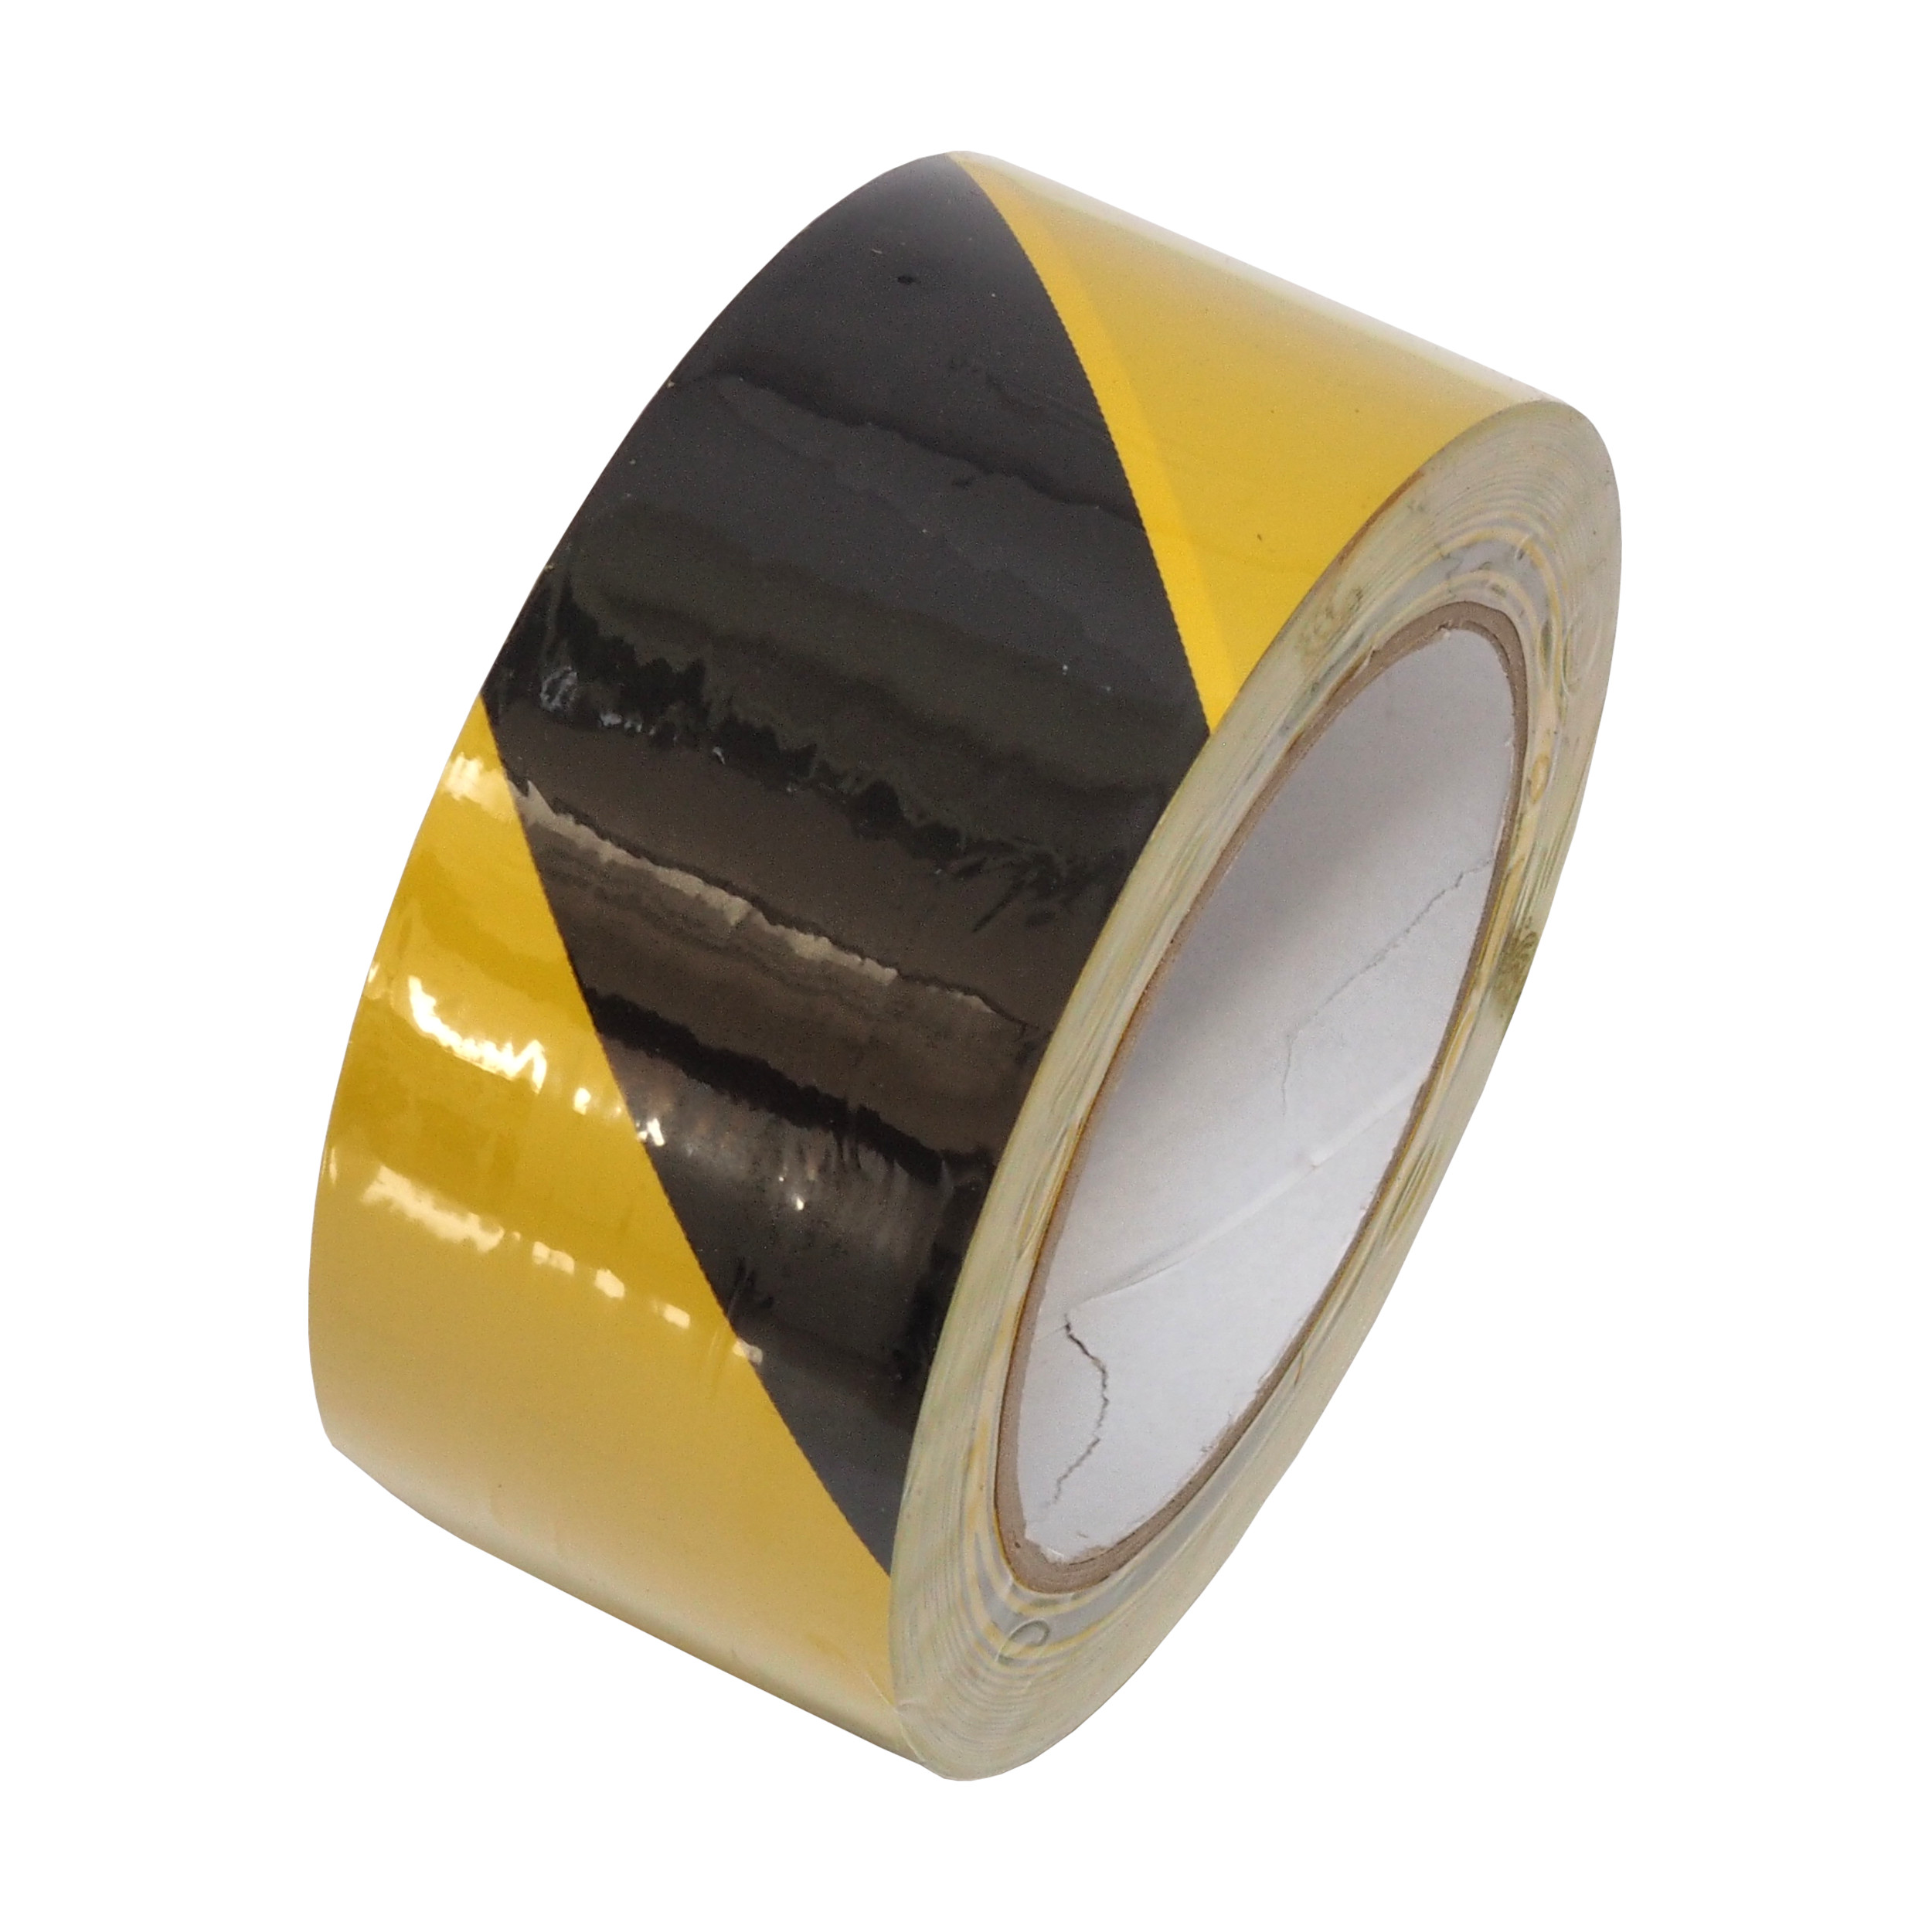 páska výstražná, lepící, PVC, černo – žlutá, 50 mm x 33 m 0.36 Kg TOP Sklad4 701303 22